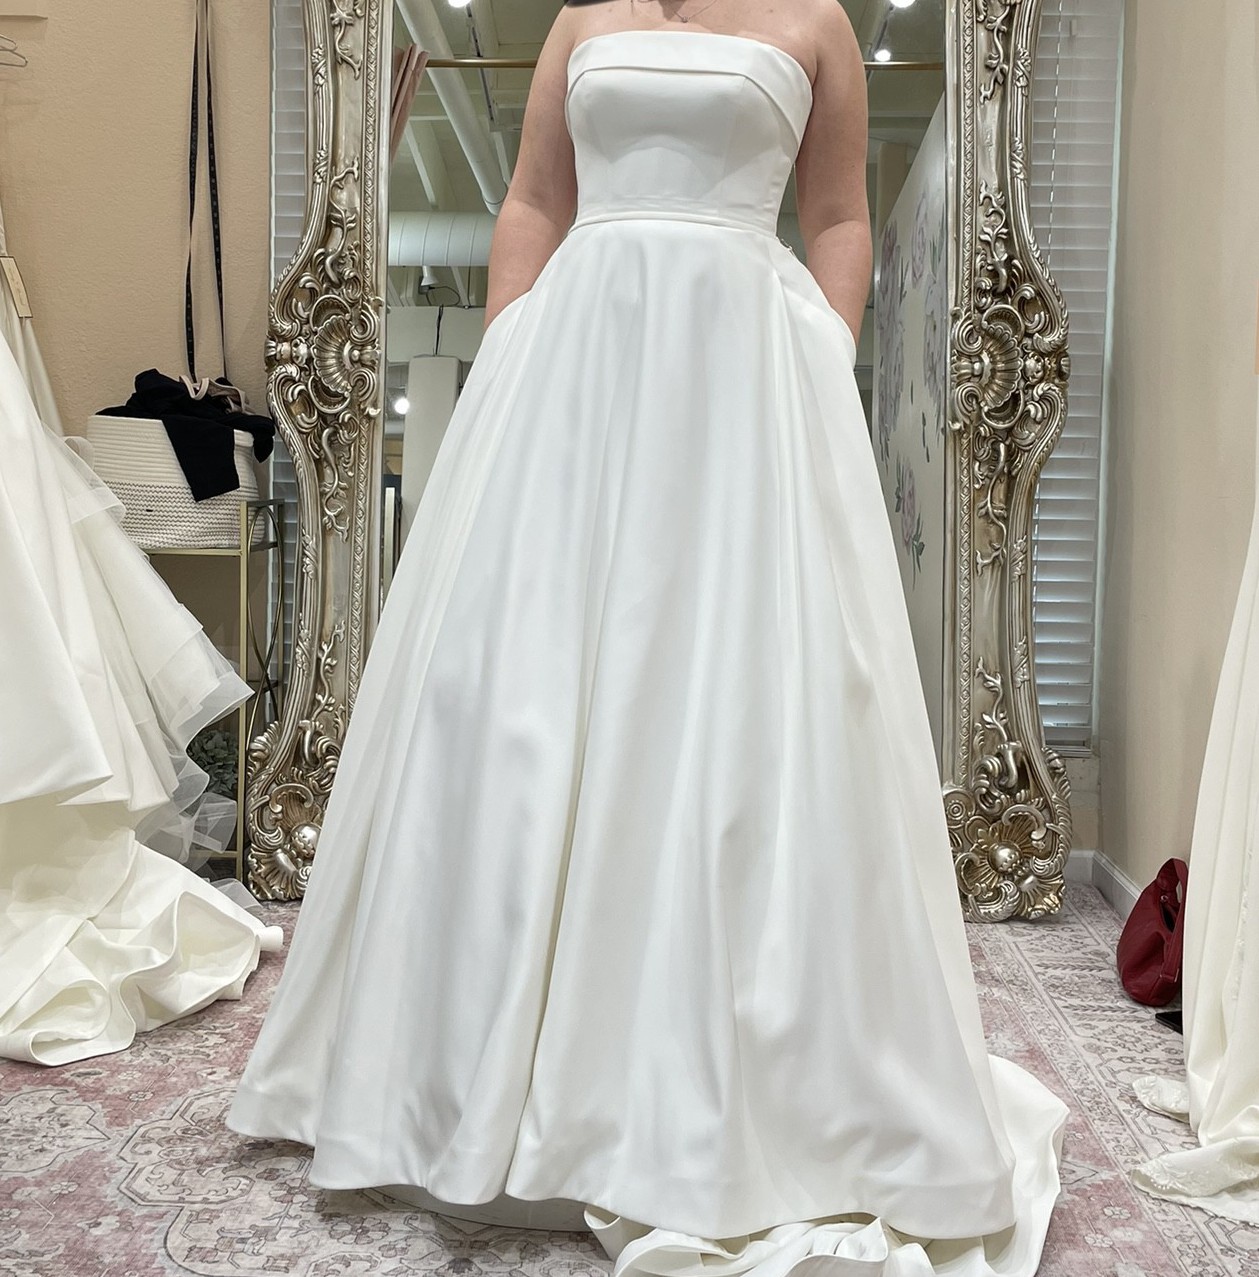 Stella York 7045 Sample Wedding Dress Save 35% - Stillwhite